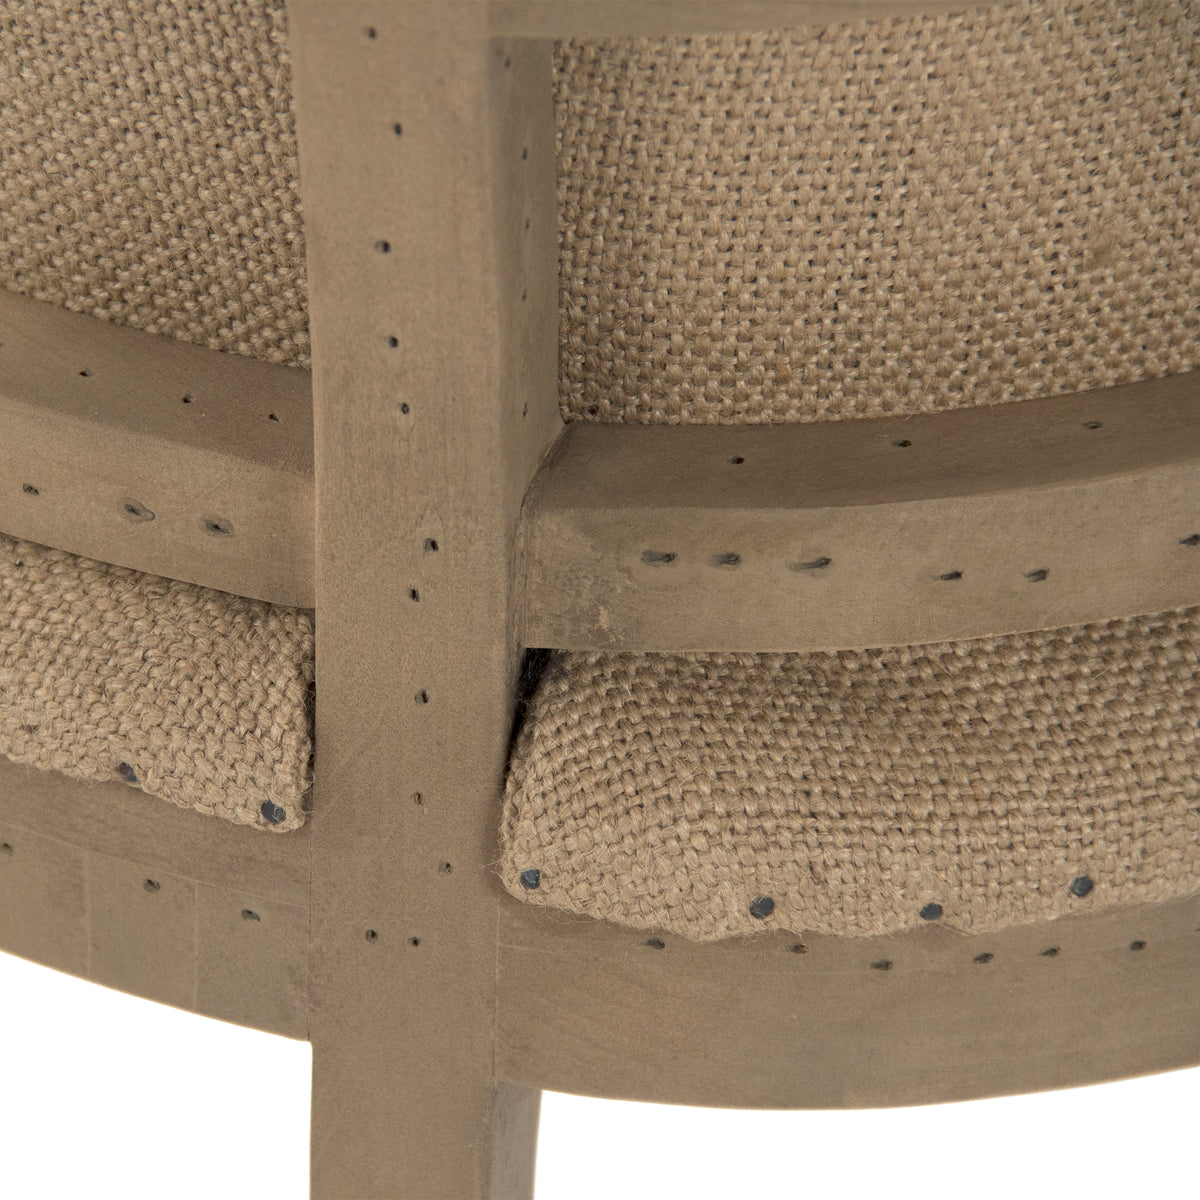 Liberte Deconstructed Arm Chair by Zentique